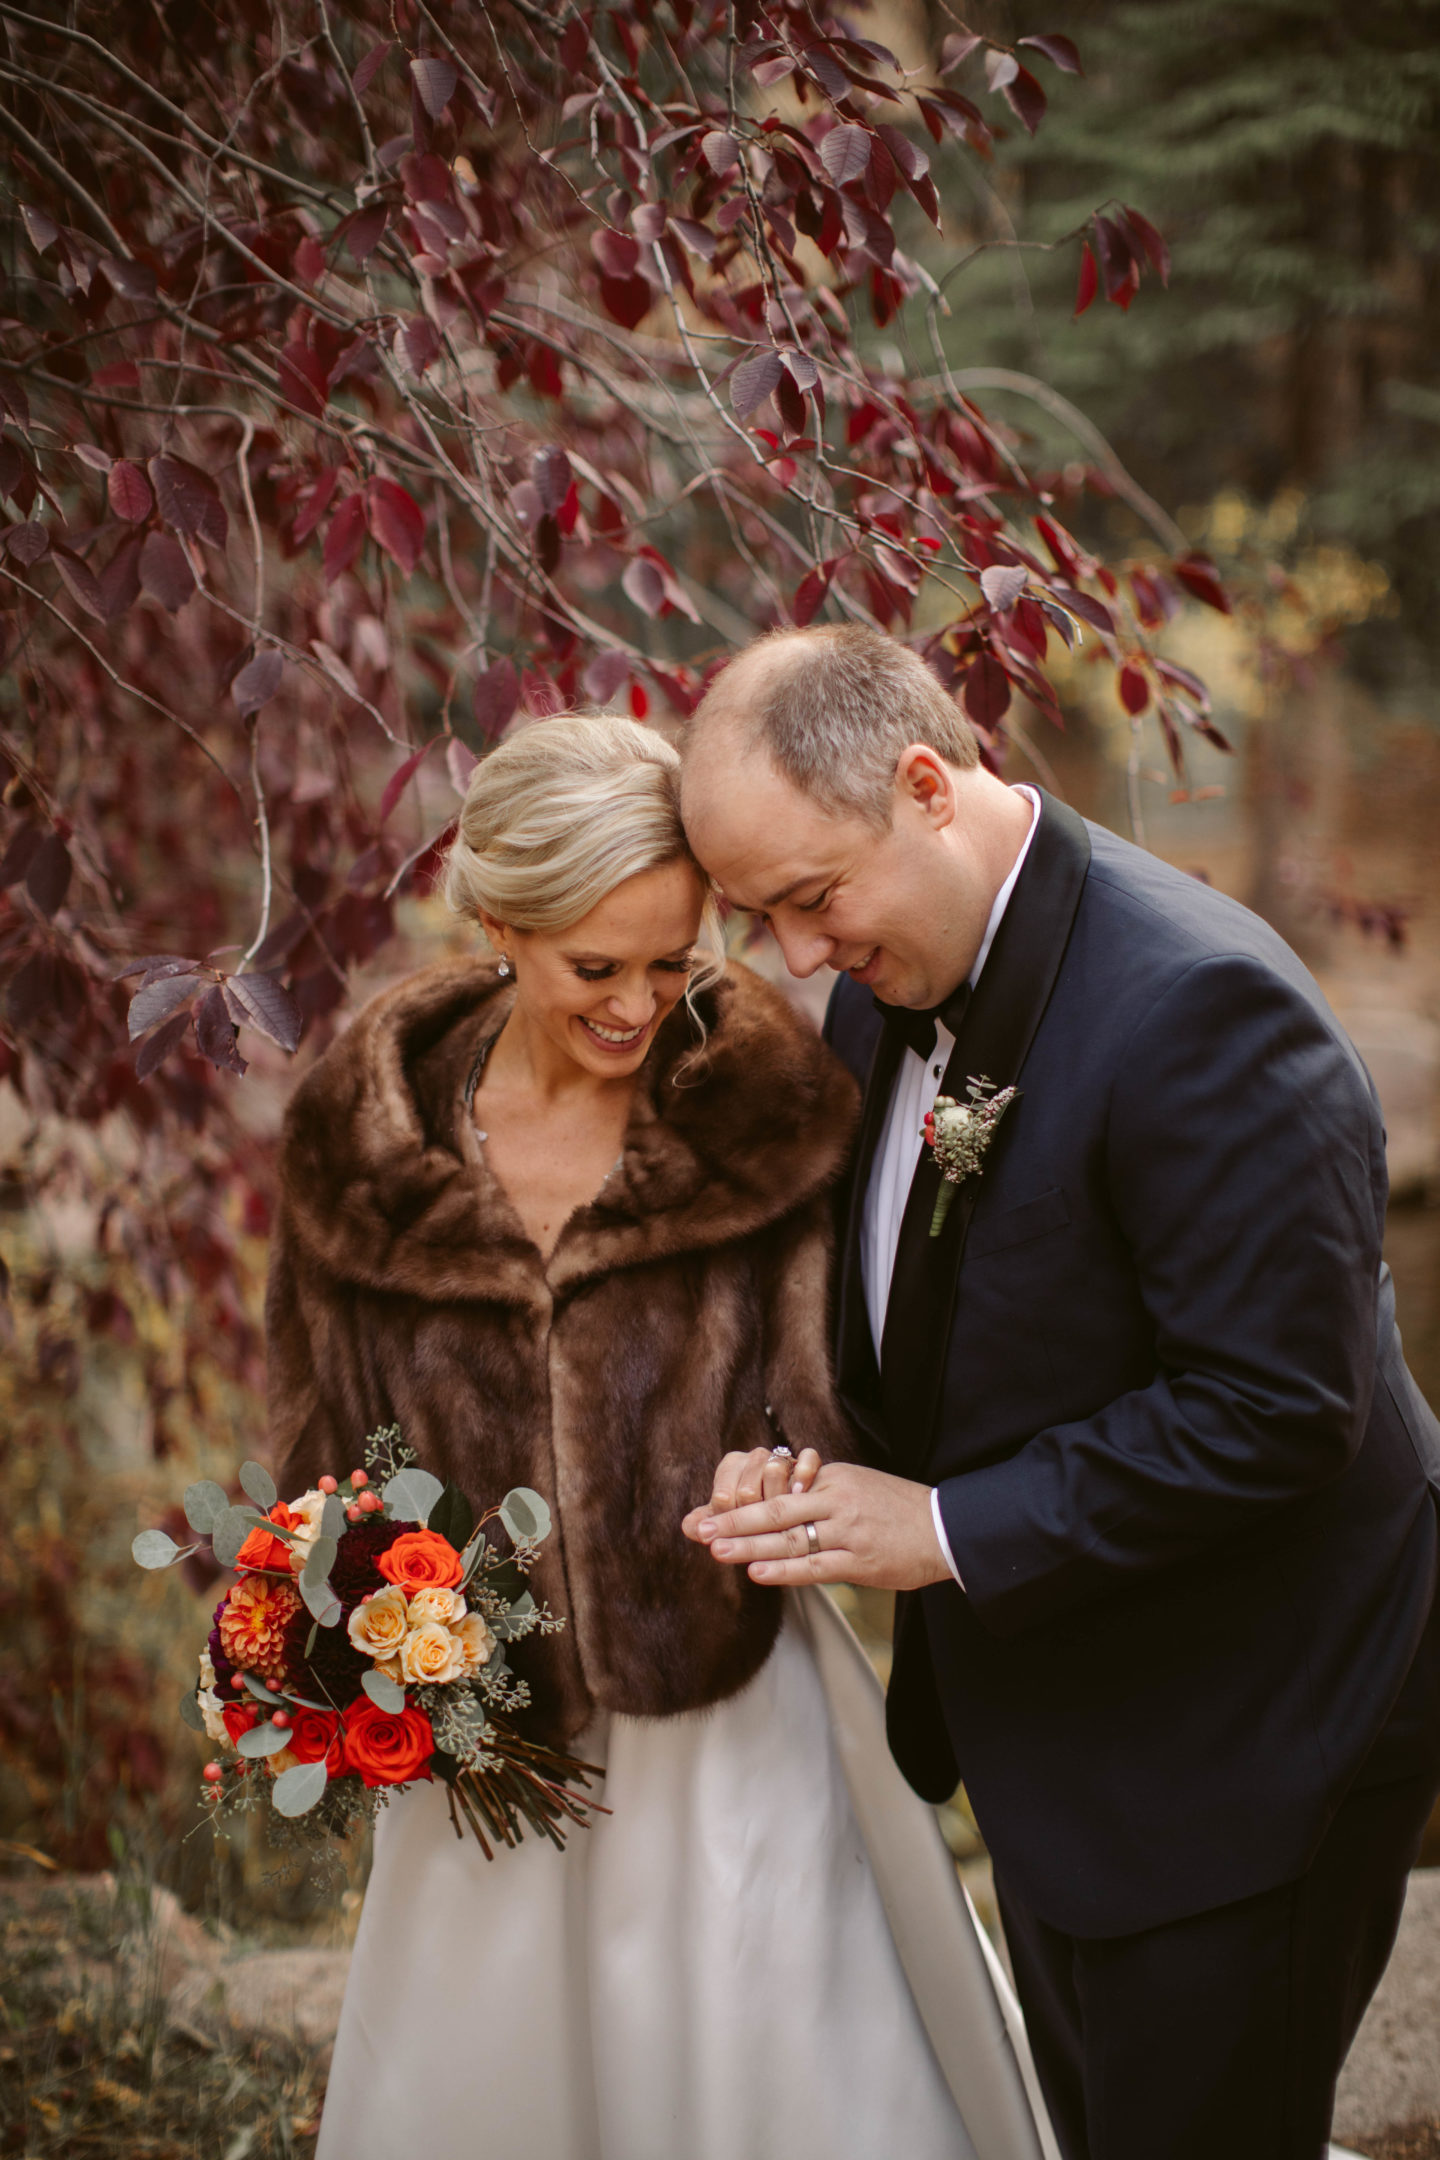 Vail Micro Wedding | Fall wedding in Colorado | COVID wedding | Vail, CO wedding